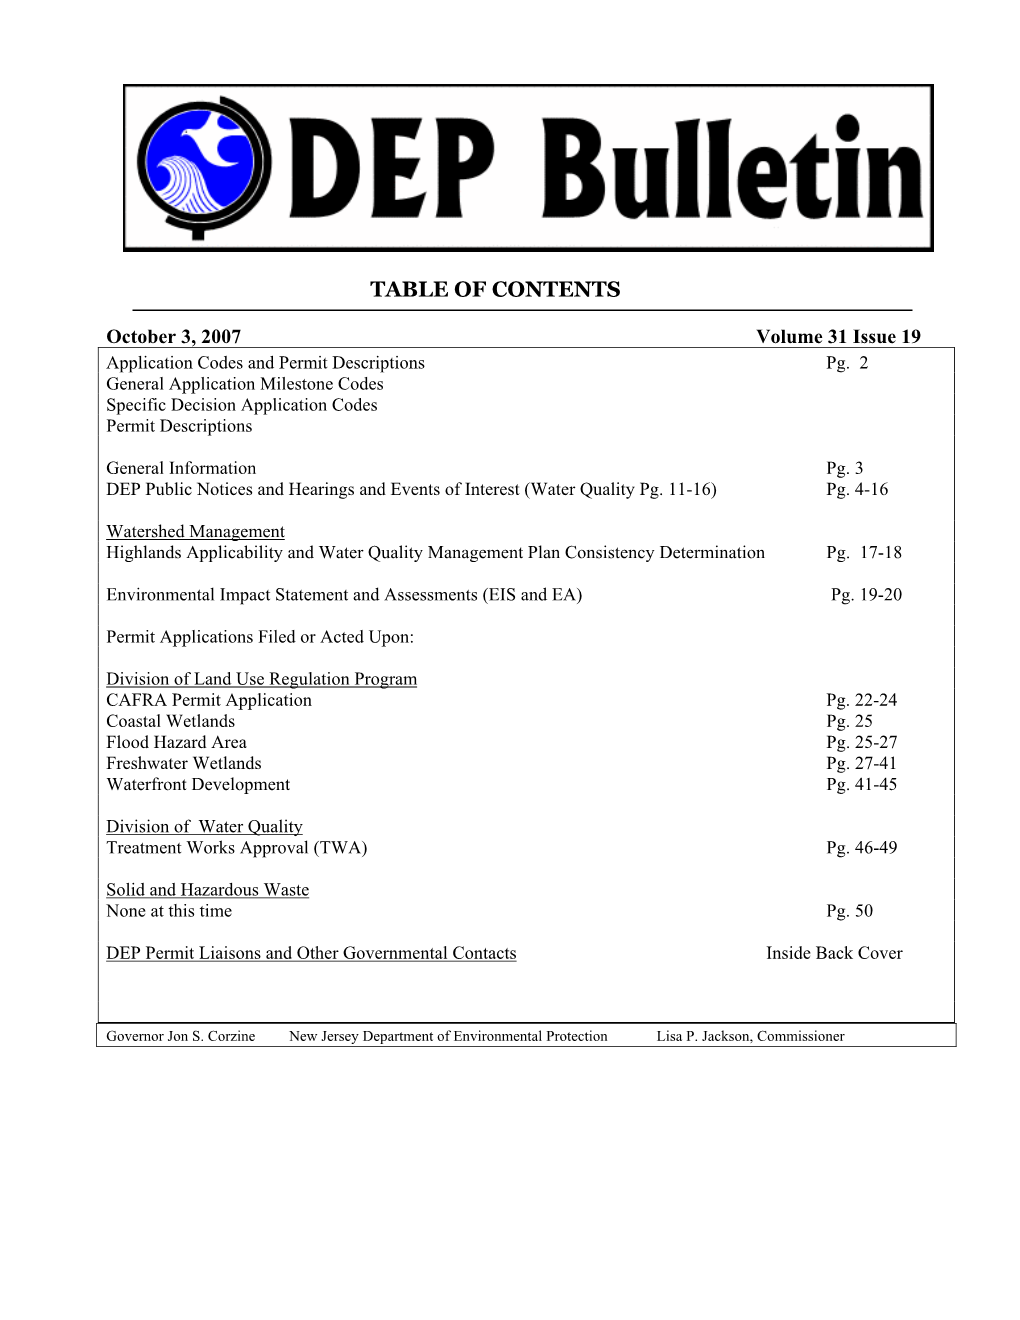 NJDEP-DEP Bulletin, 10/3/2007 Issue`